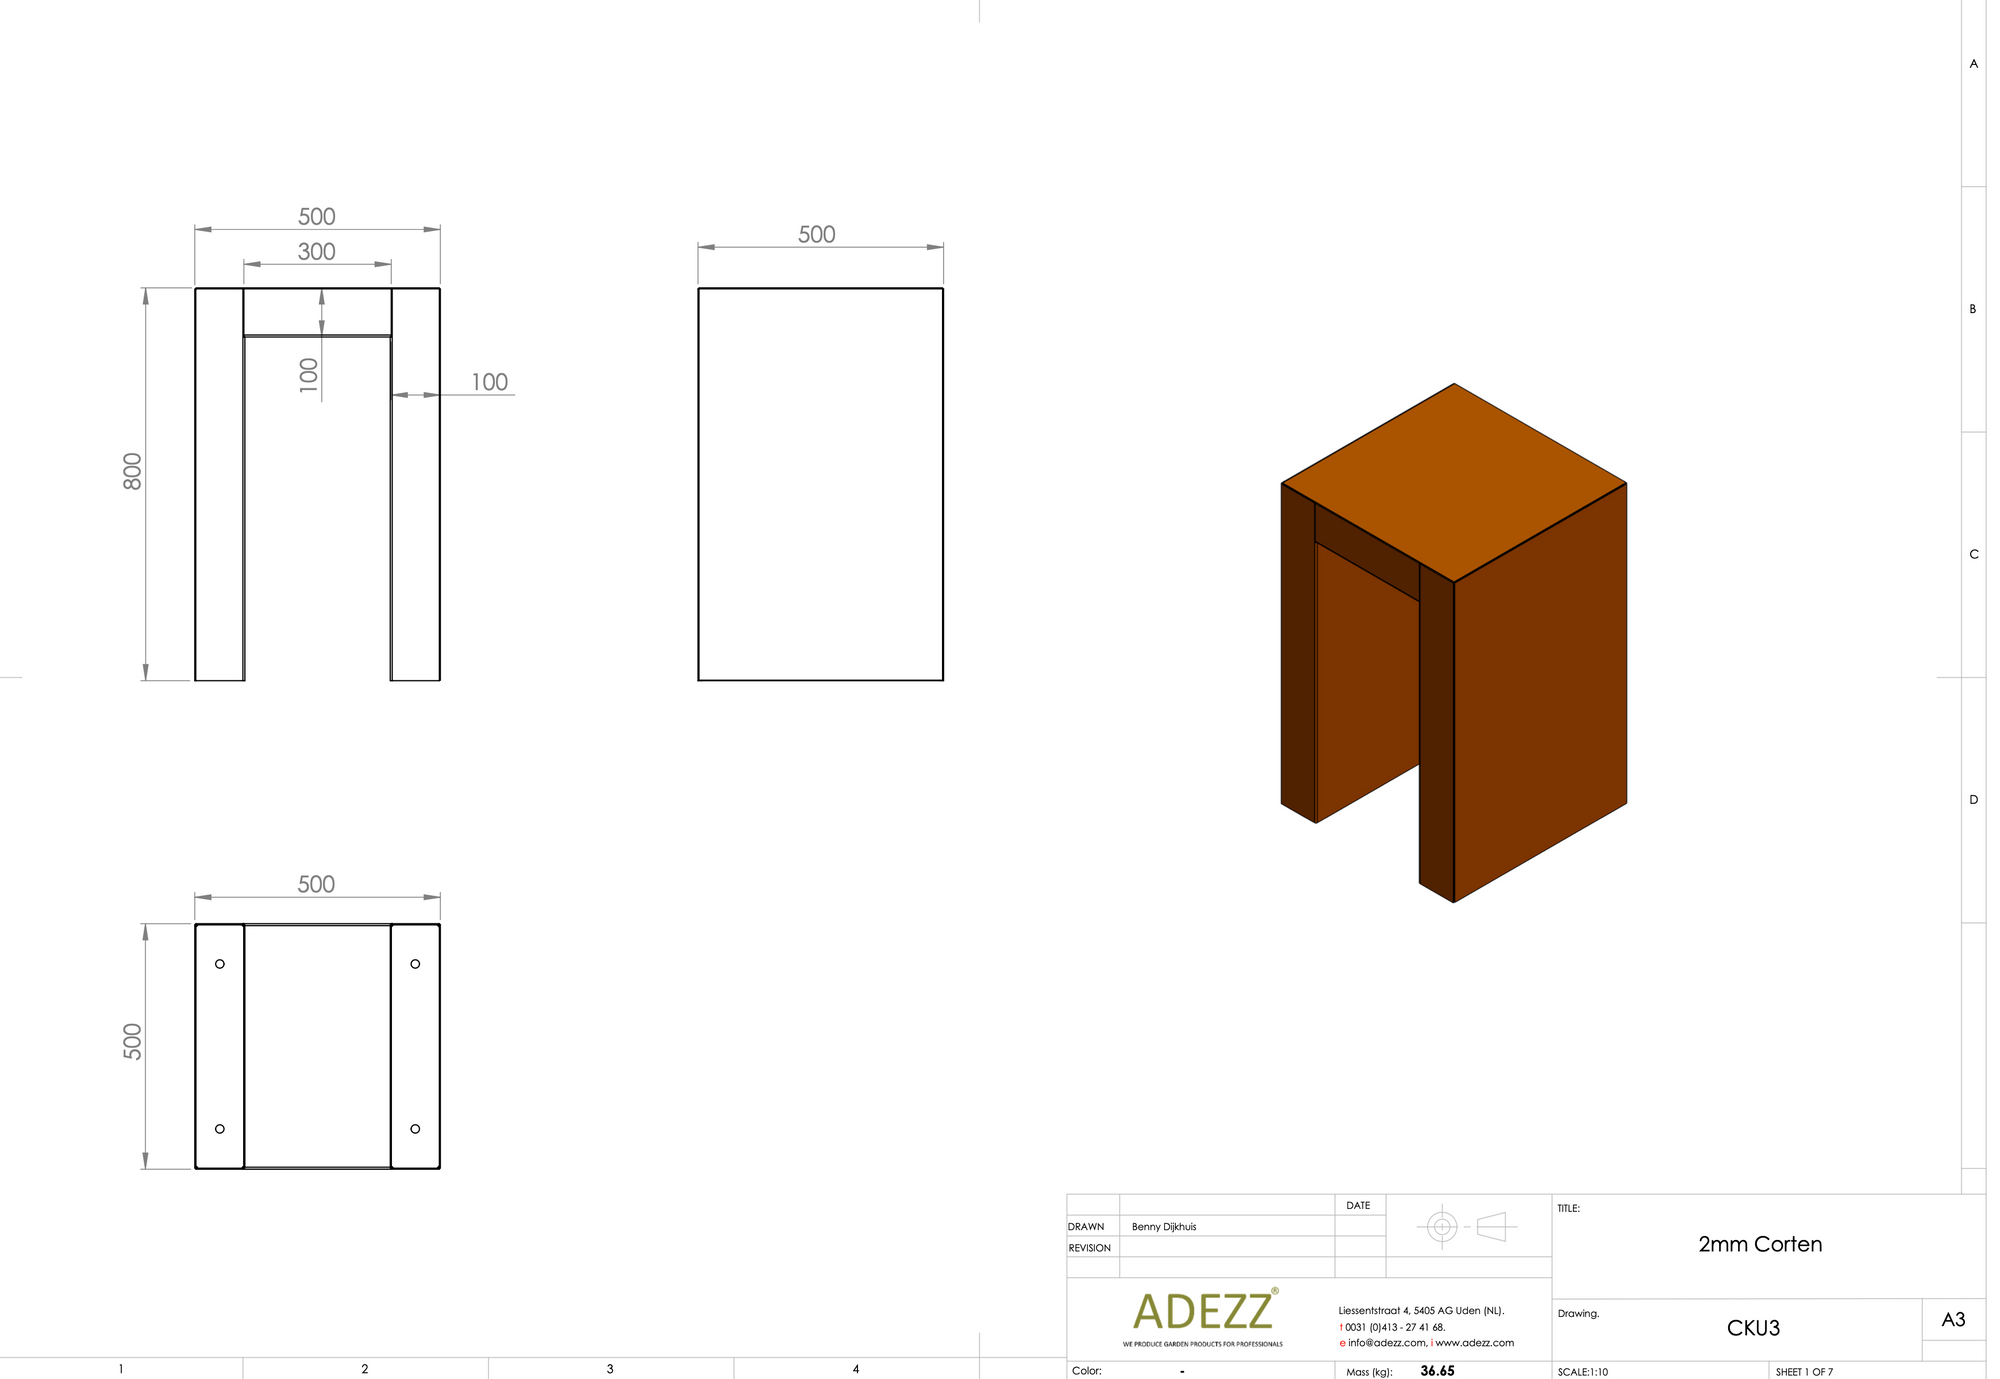 Adezz U-shaped base made of Corten steel 